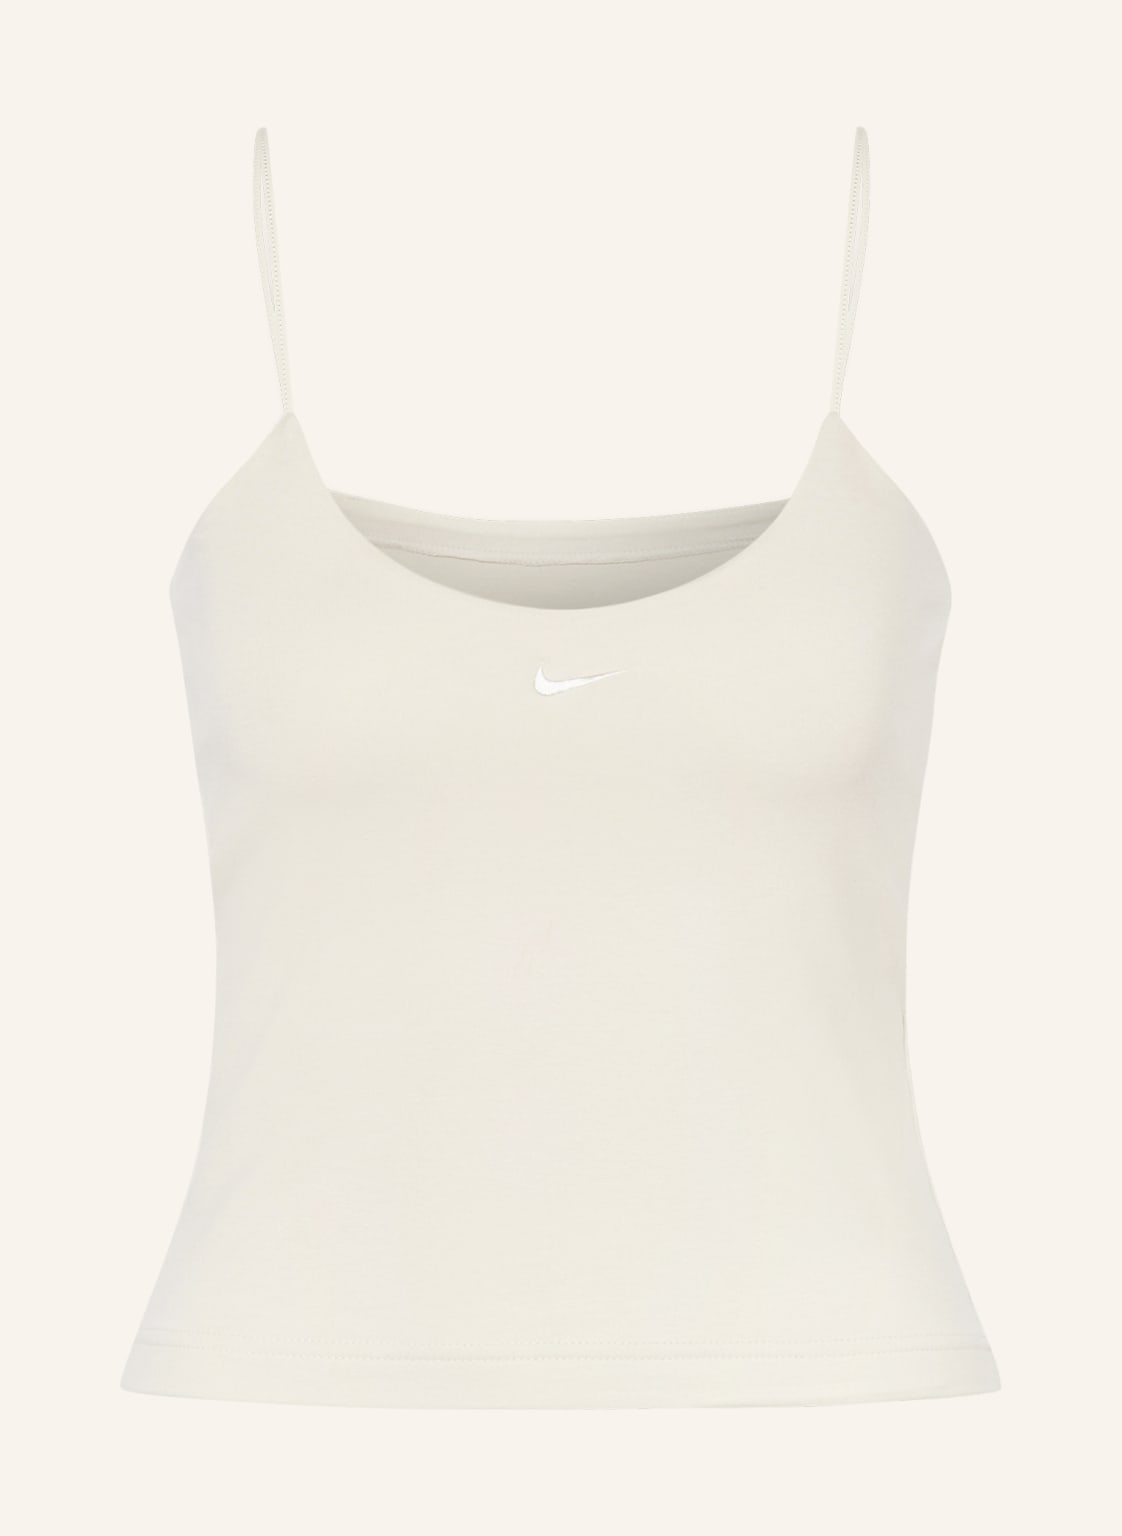 Nike Cropped-Top beige von Nike